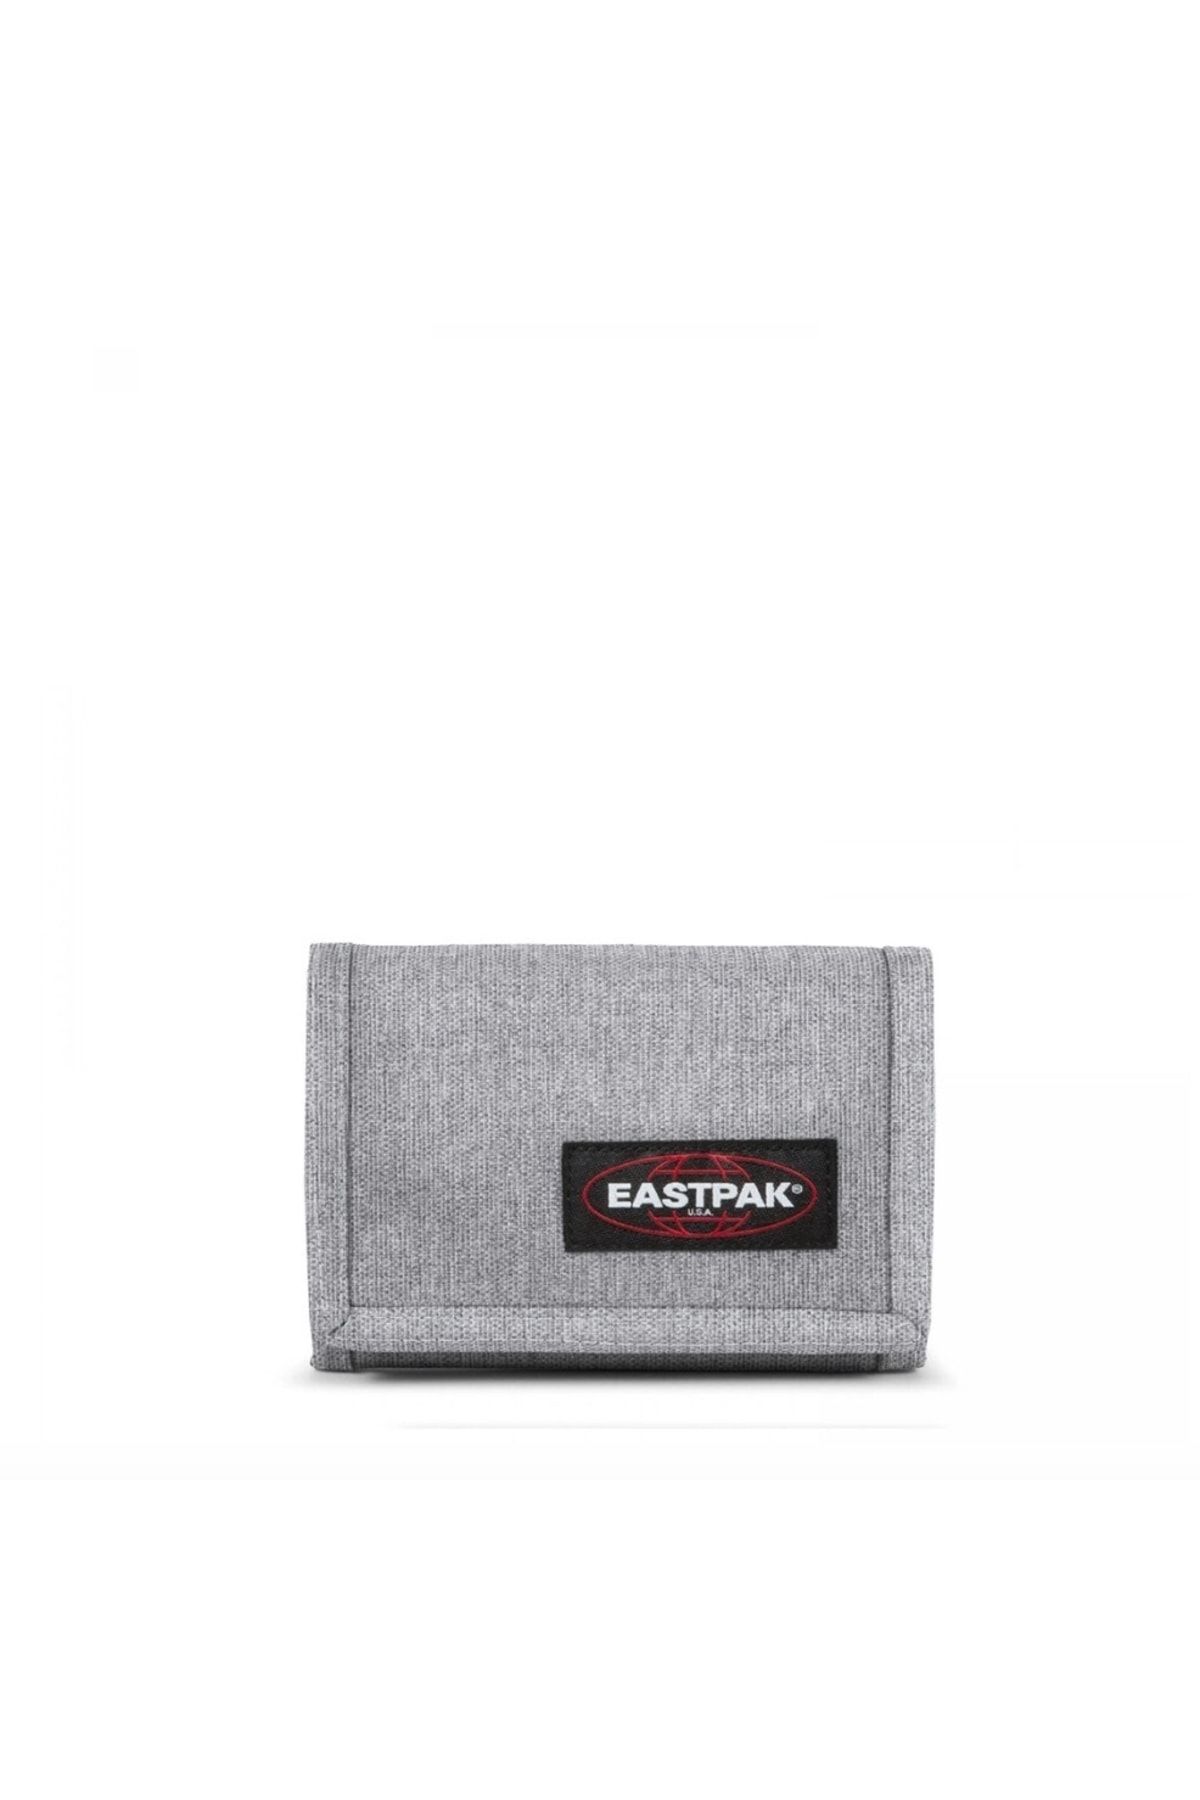 Eastpak Crew Single - Ek0003713631